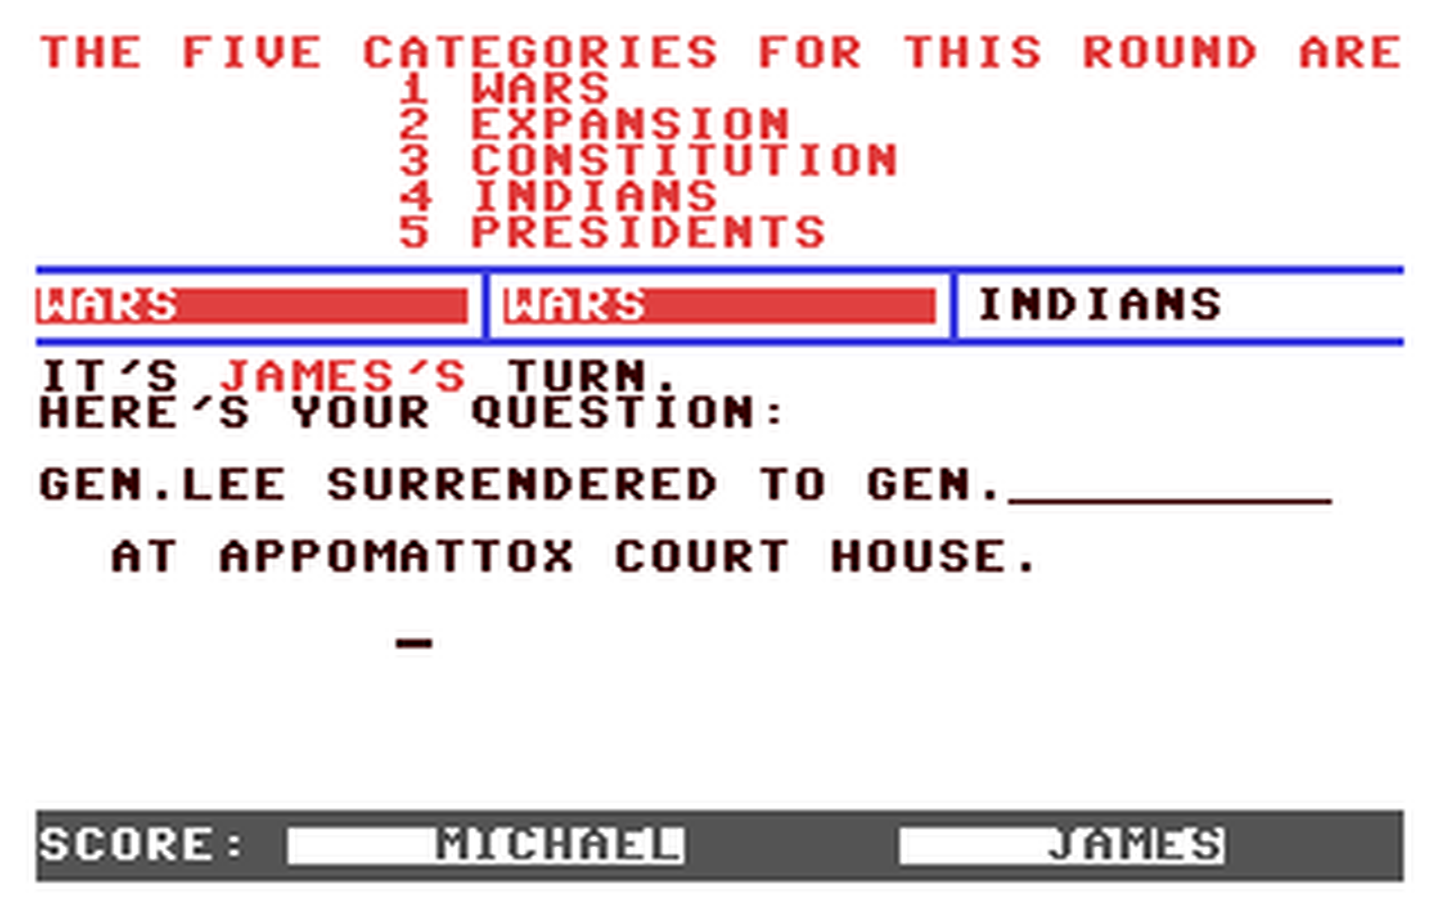 C64 GameBase History_Flash (Public_Domain) 1986